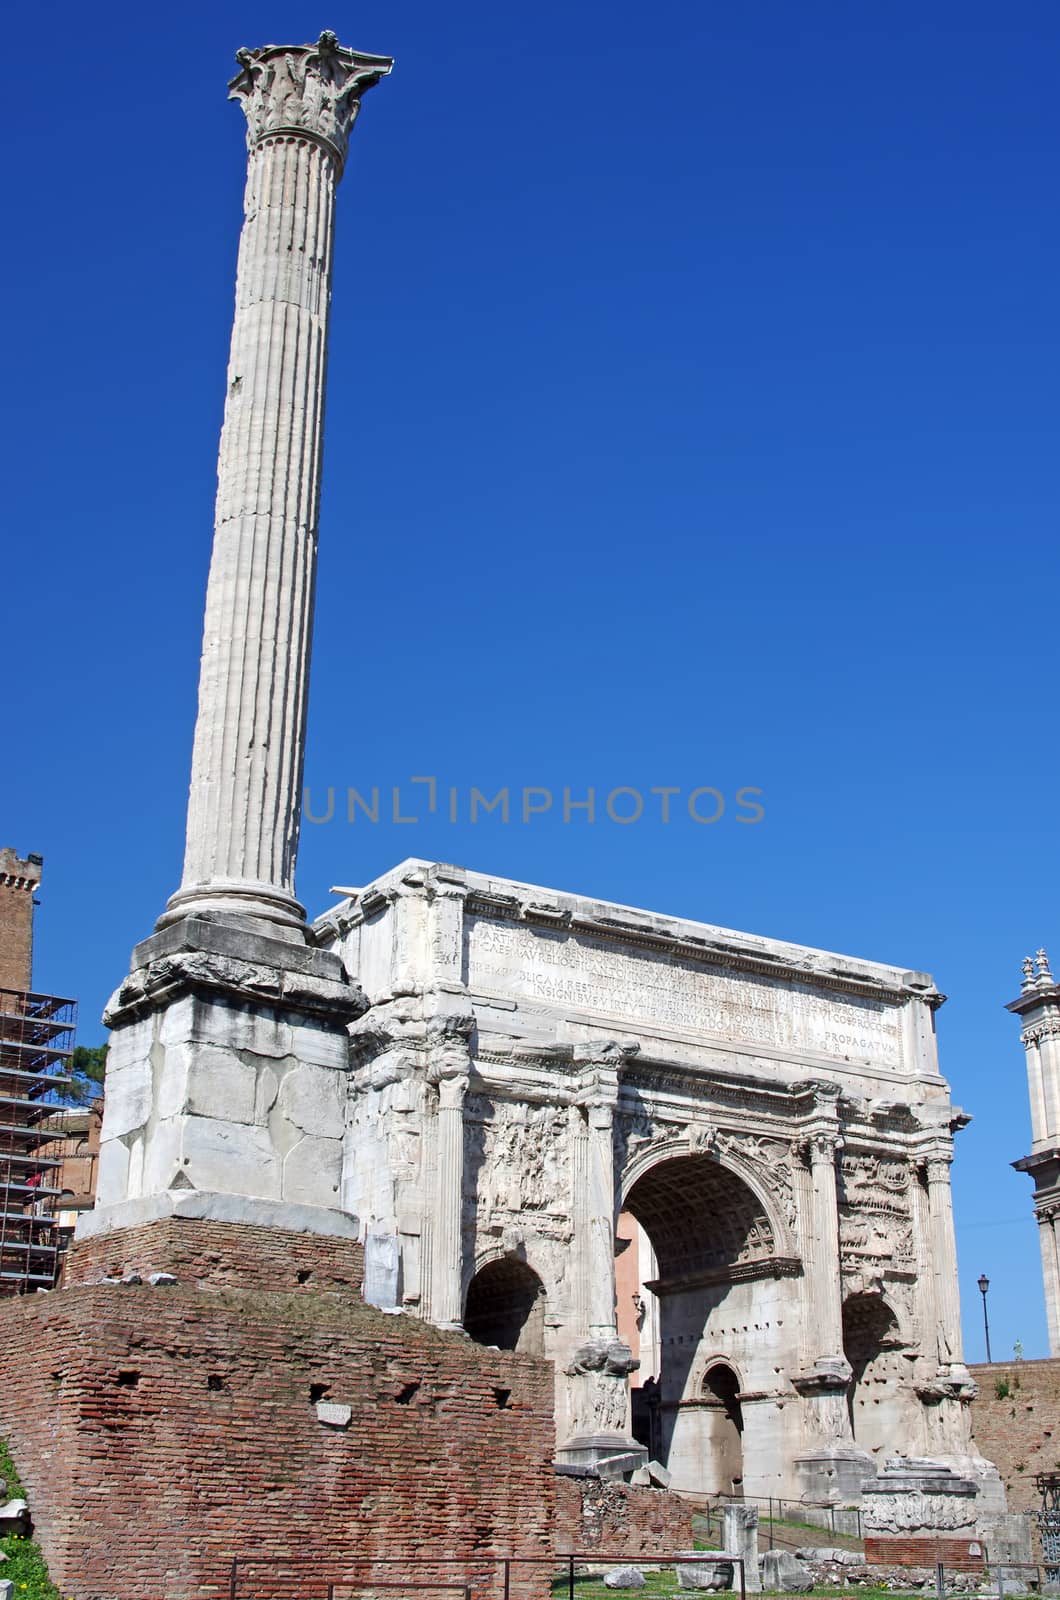 Roman ruins (Arch of Septimius Sever) in Rome